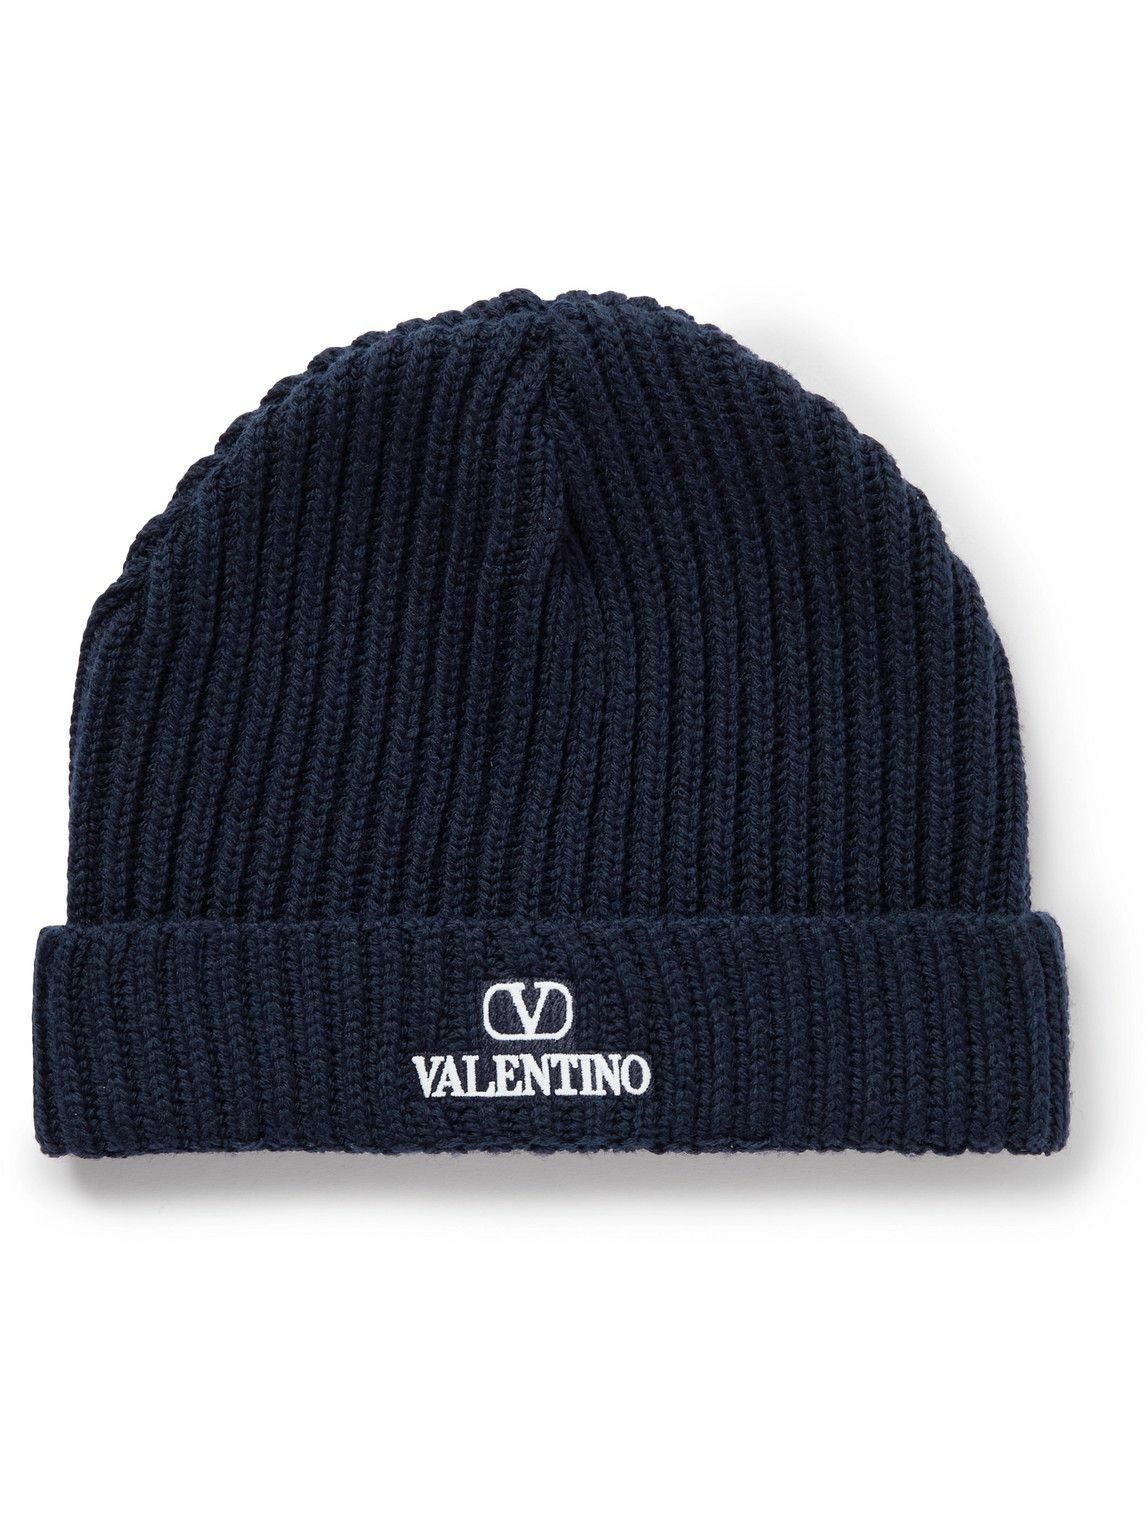 Photo: Valentino - Valentino Garavani Logo-Embroidered Ribbed Virgin Wool Beanie